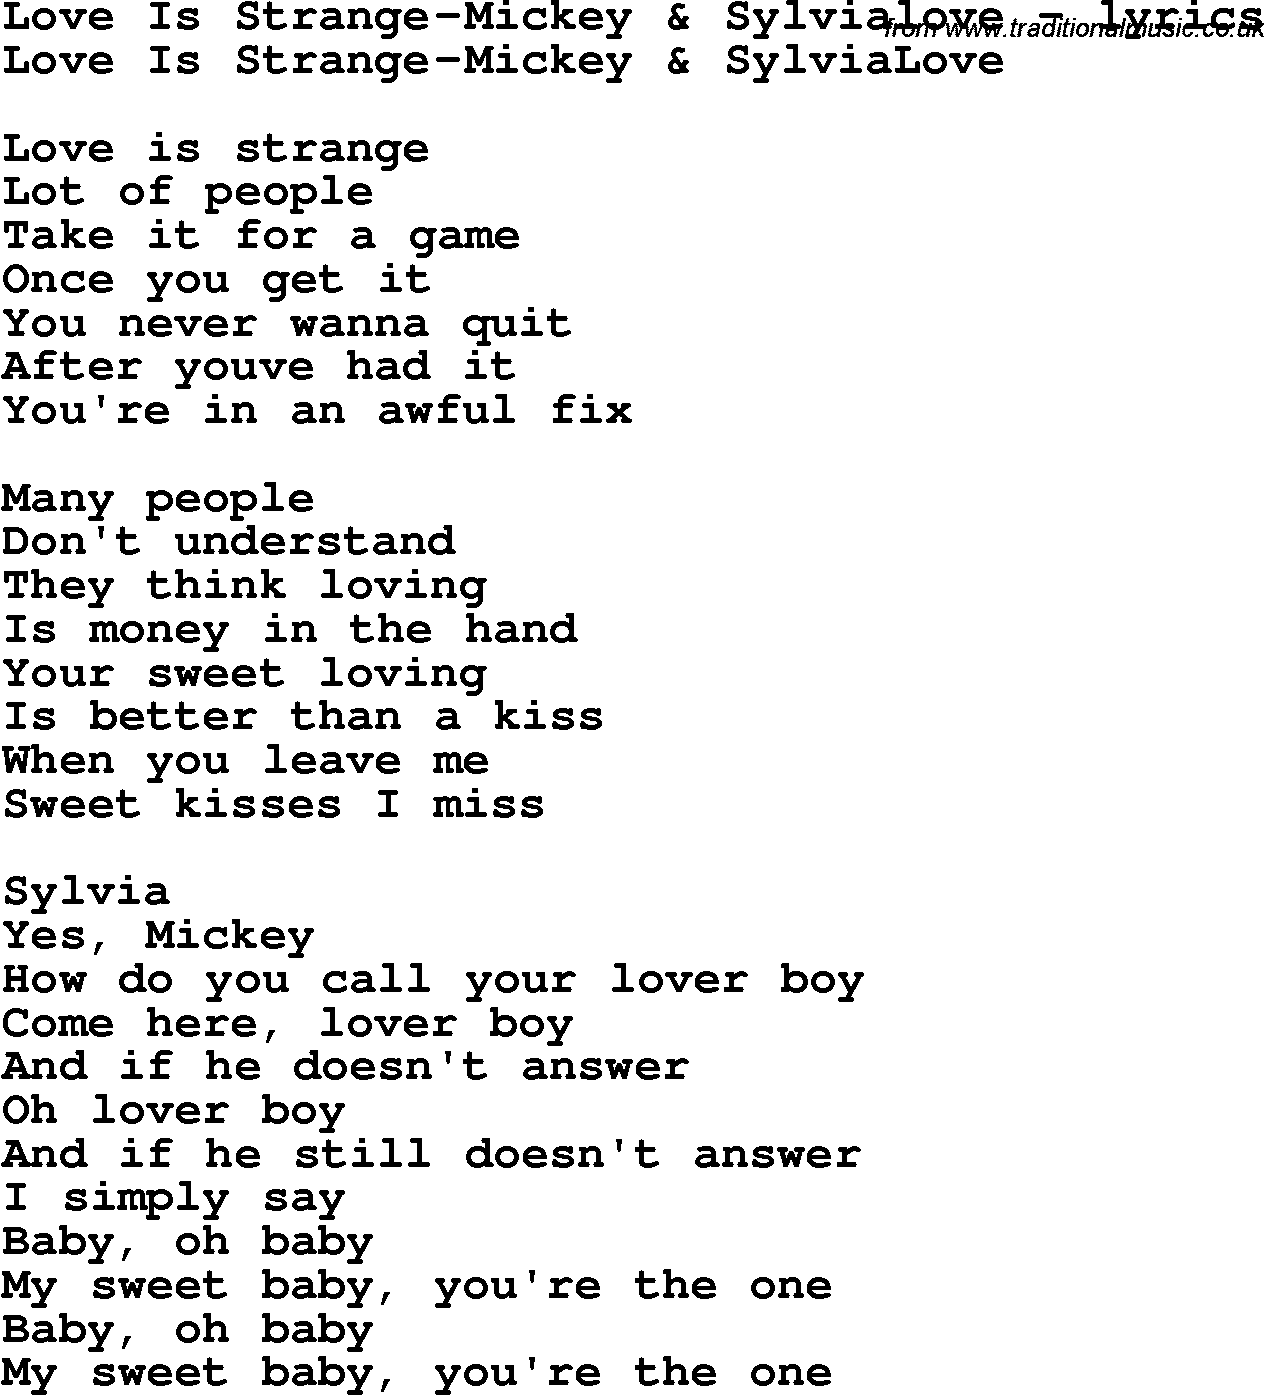 Love Song Lyrics for: Love Is Strange-Mickey & Sylvialove